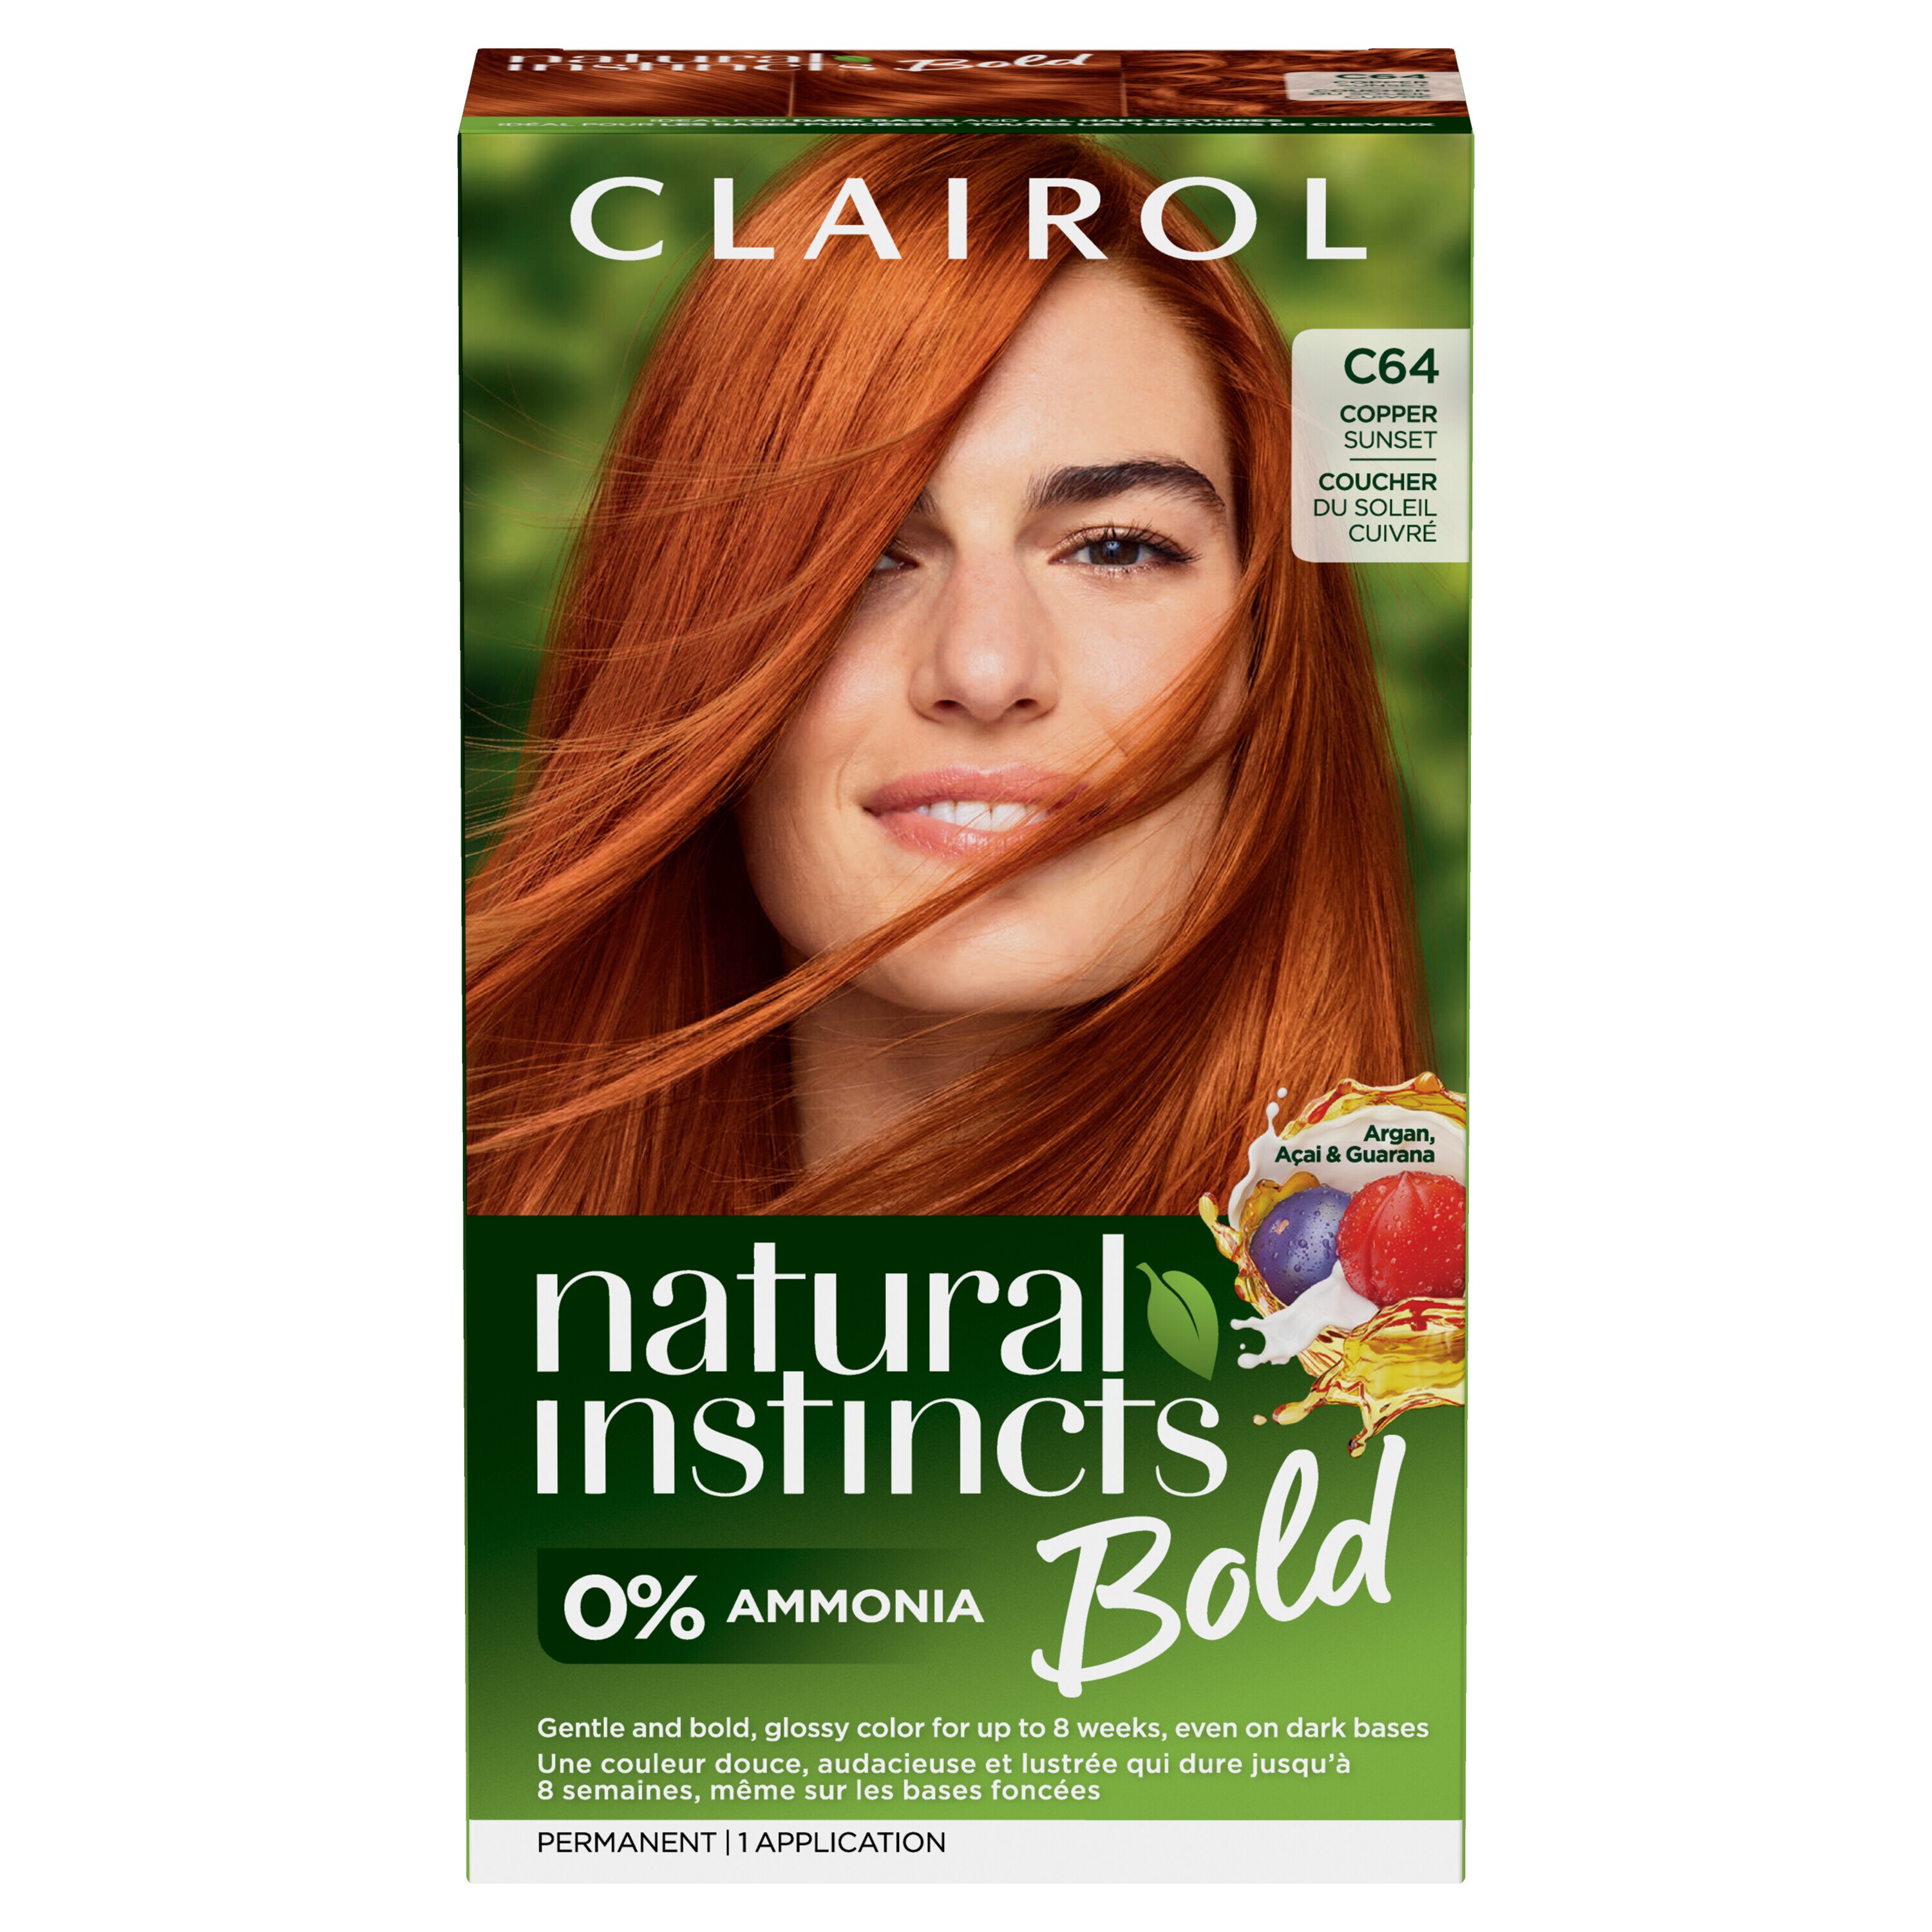 Clairol Natural Instincts Bold Permanent Hair Color, C64 Copper Sunset , CVS